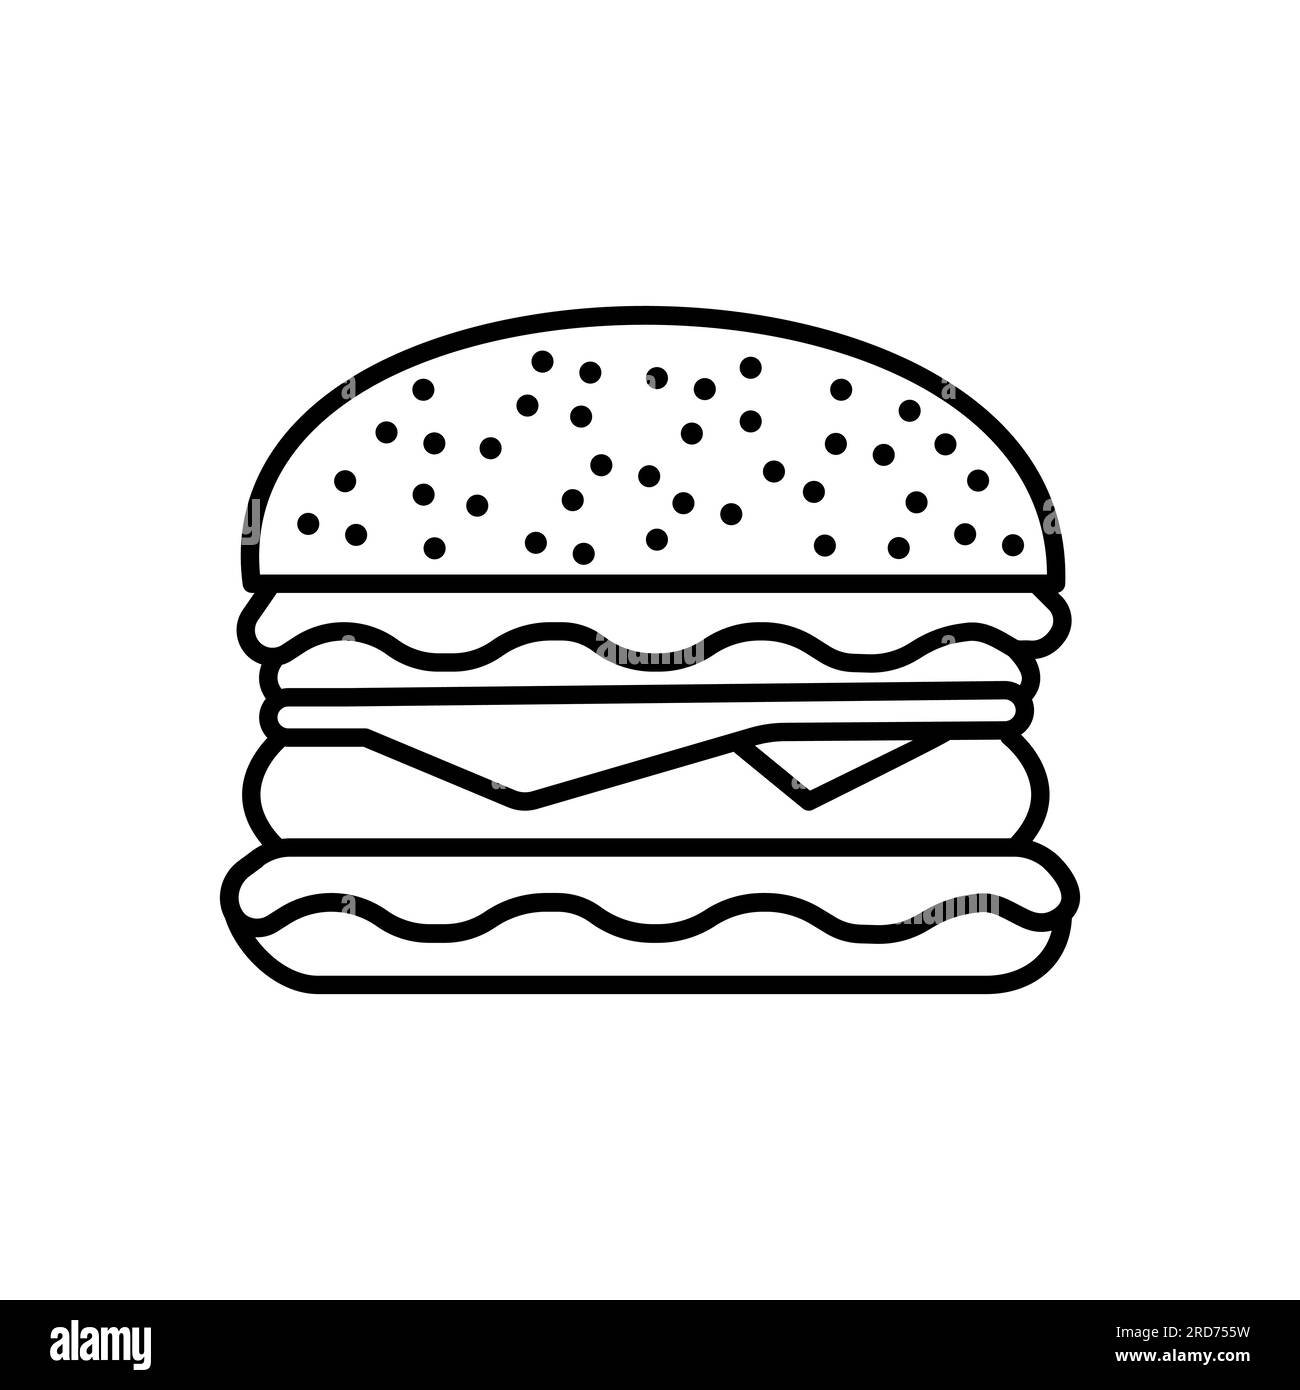 Burger hamburger logo icon design Stock Vector